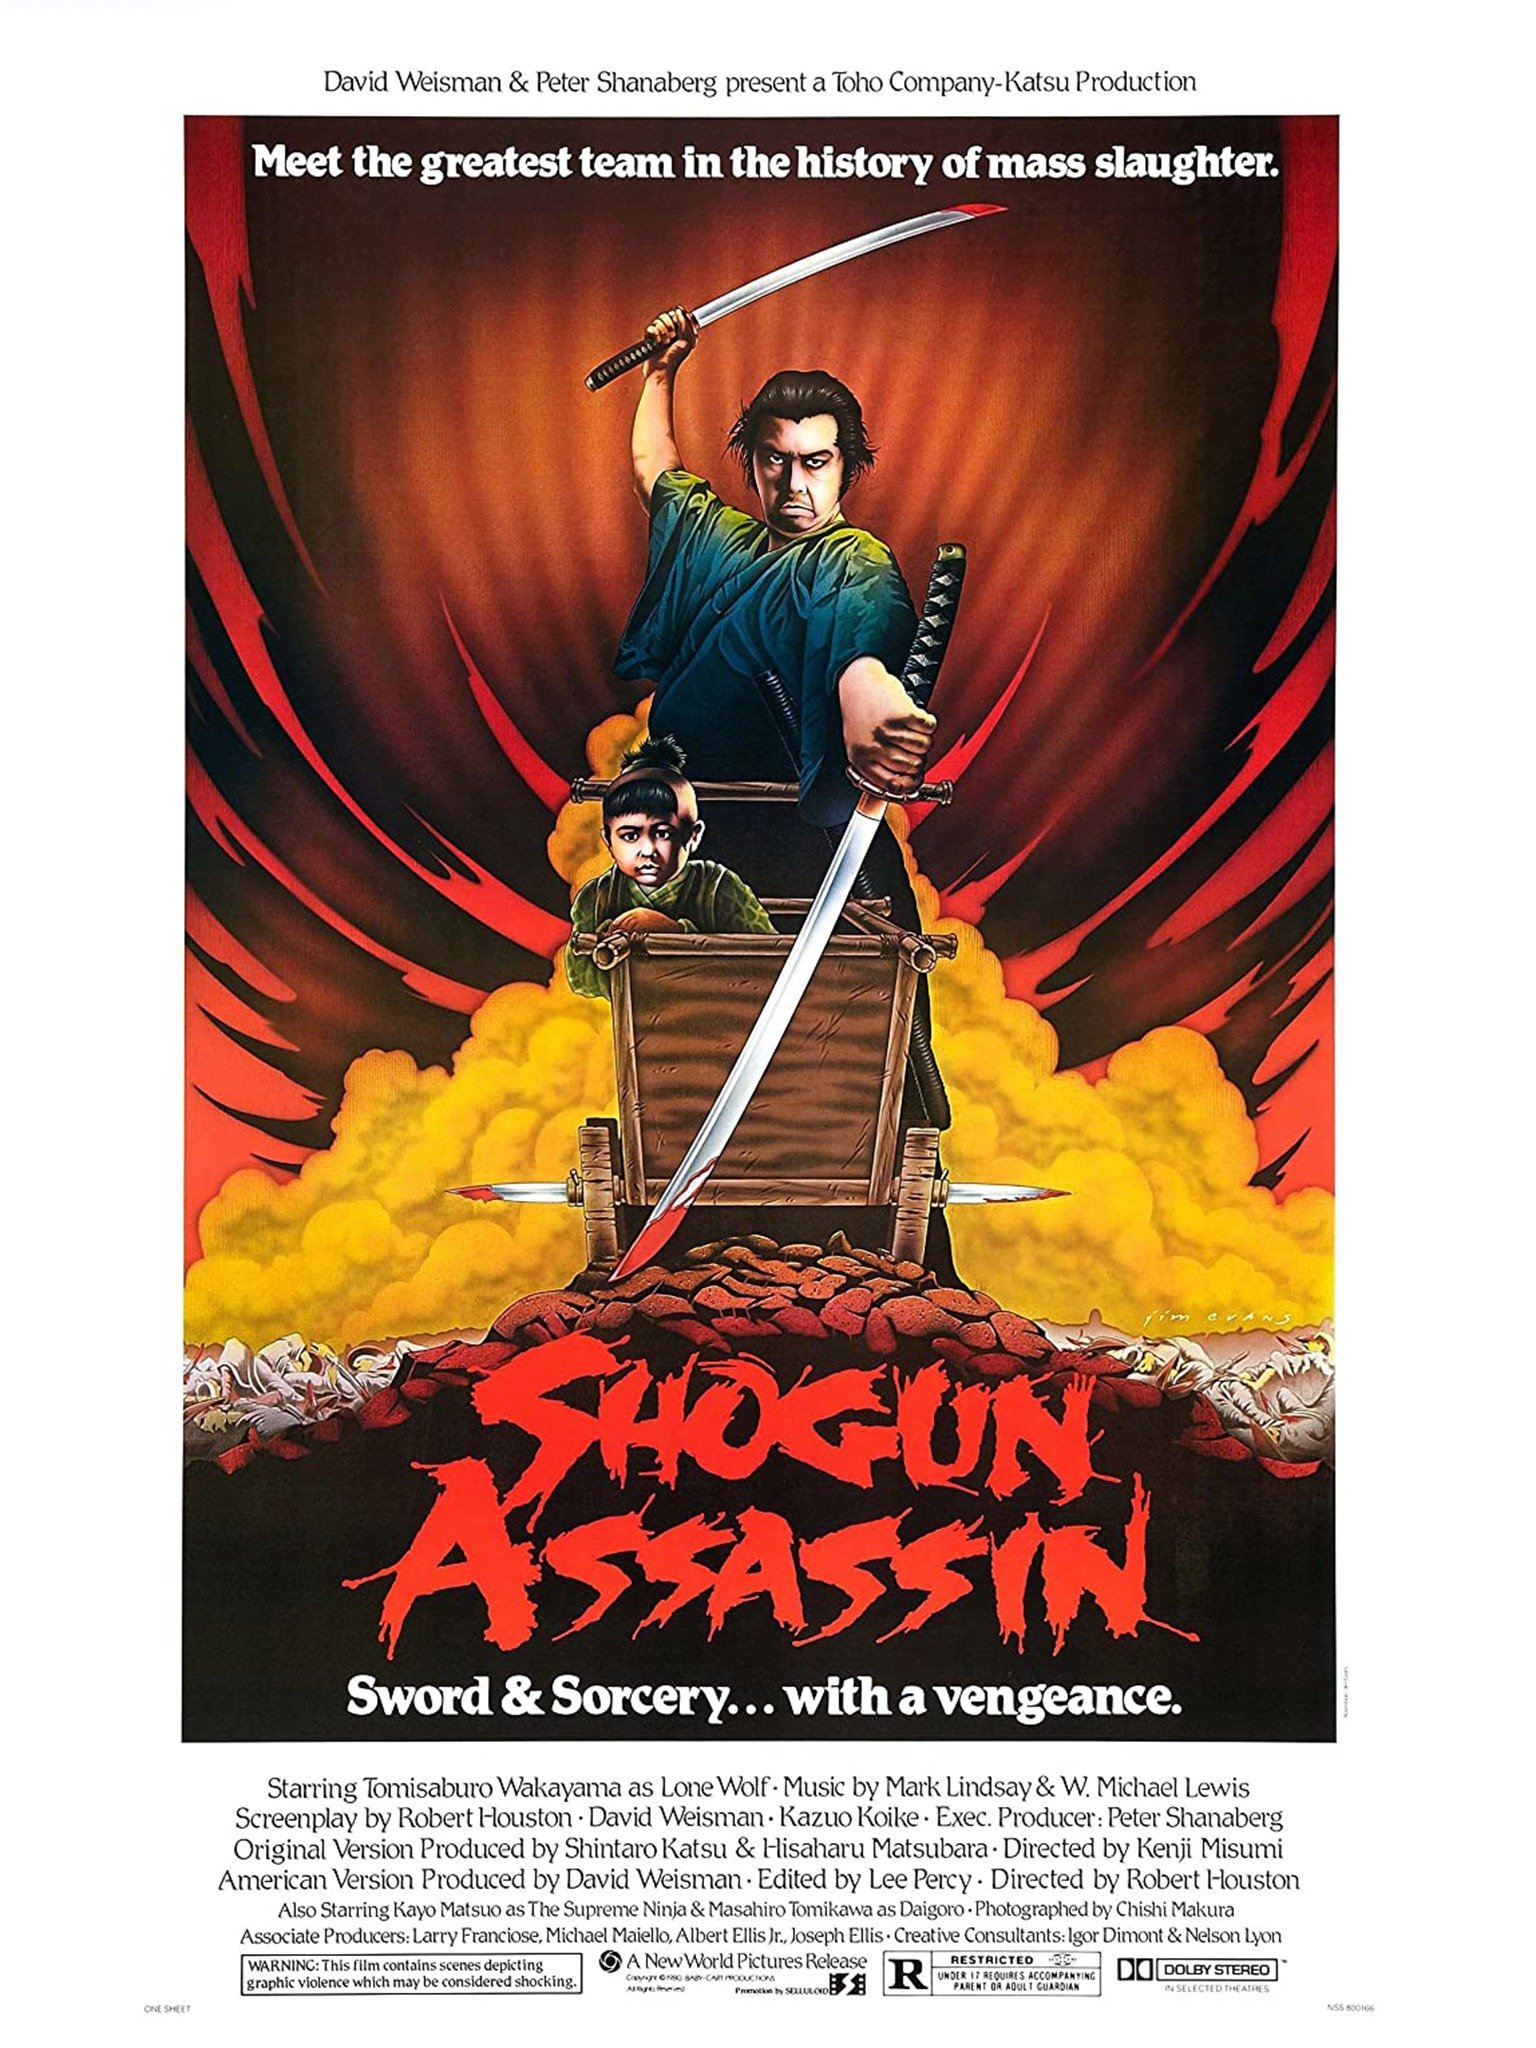 Shogun Serie Tv Streaming Shogun Assassin - Rotten Tomatoes